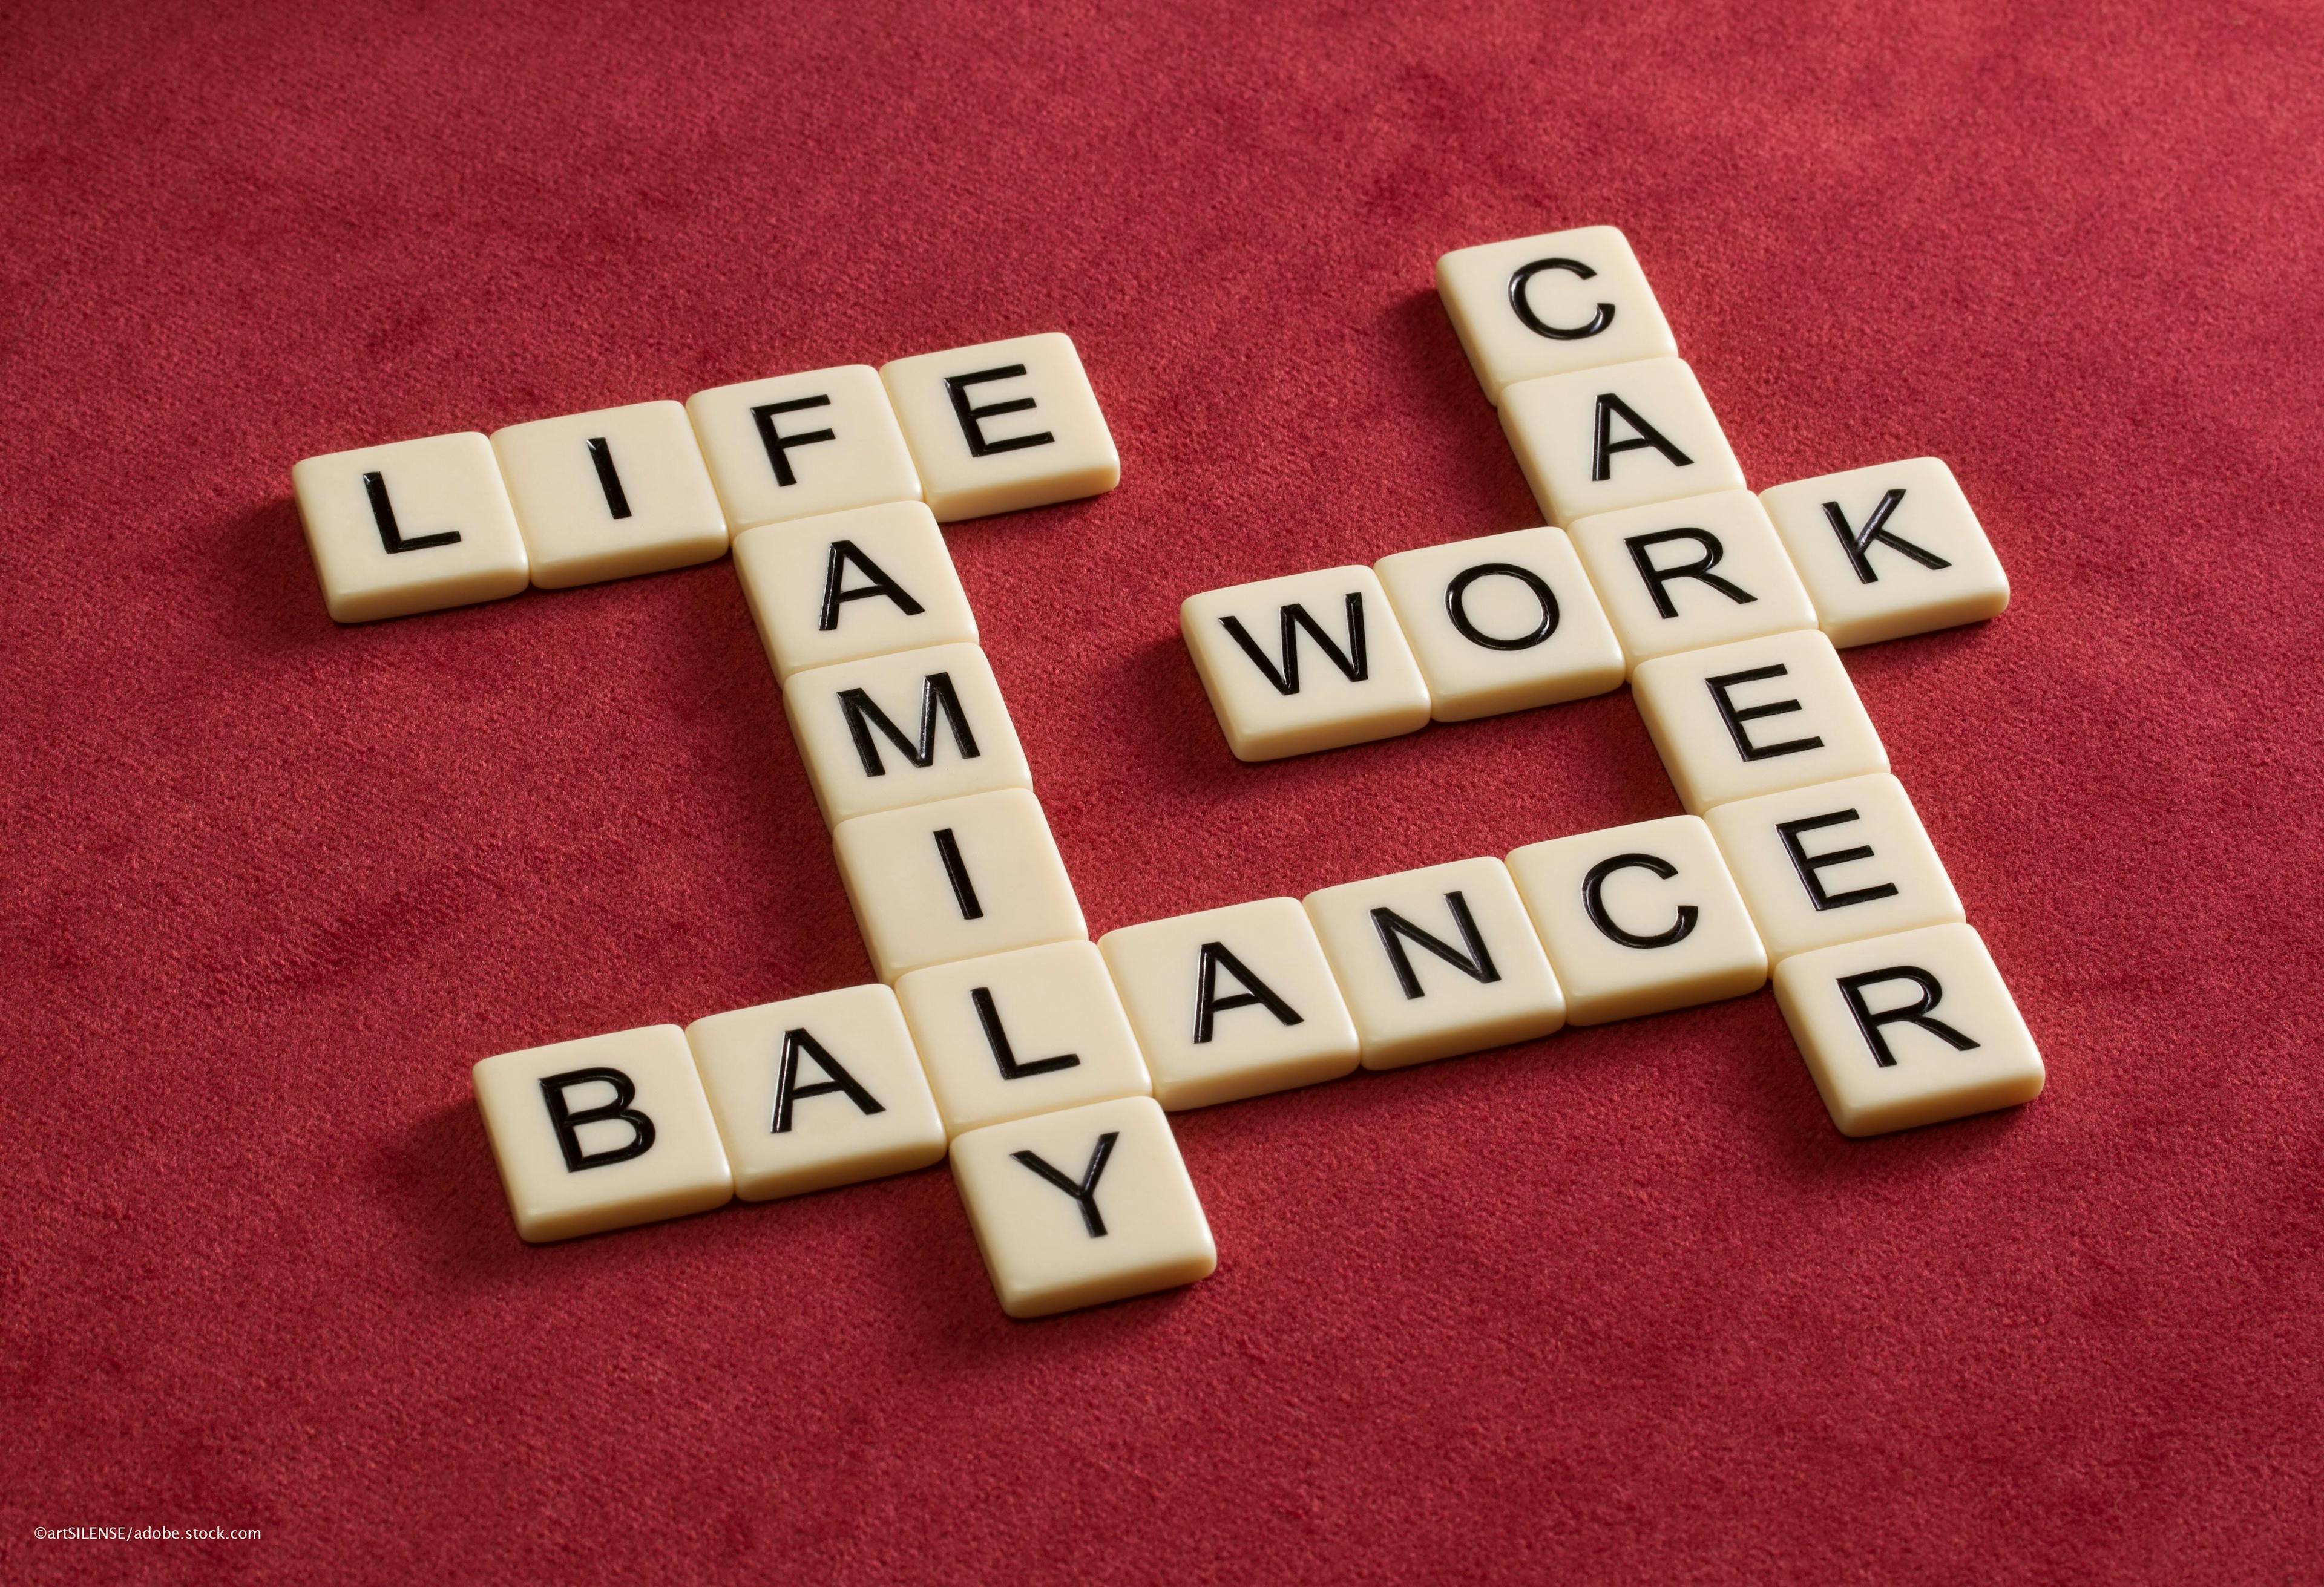 Physicians want work-life balance